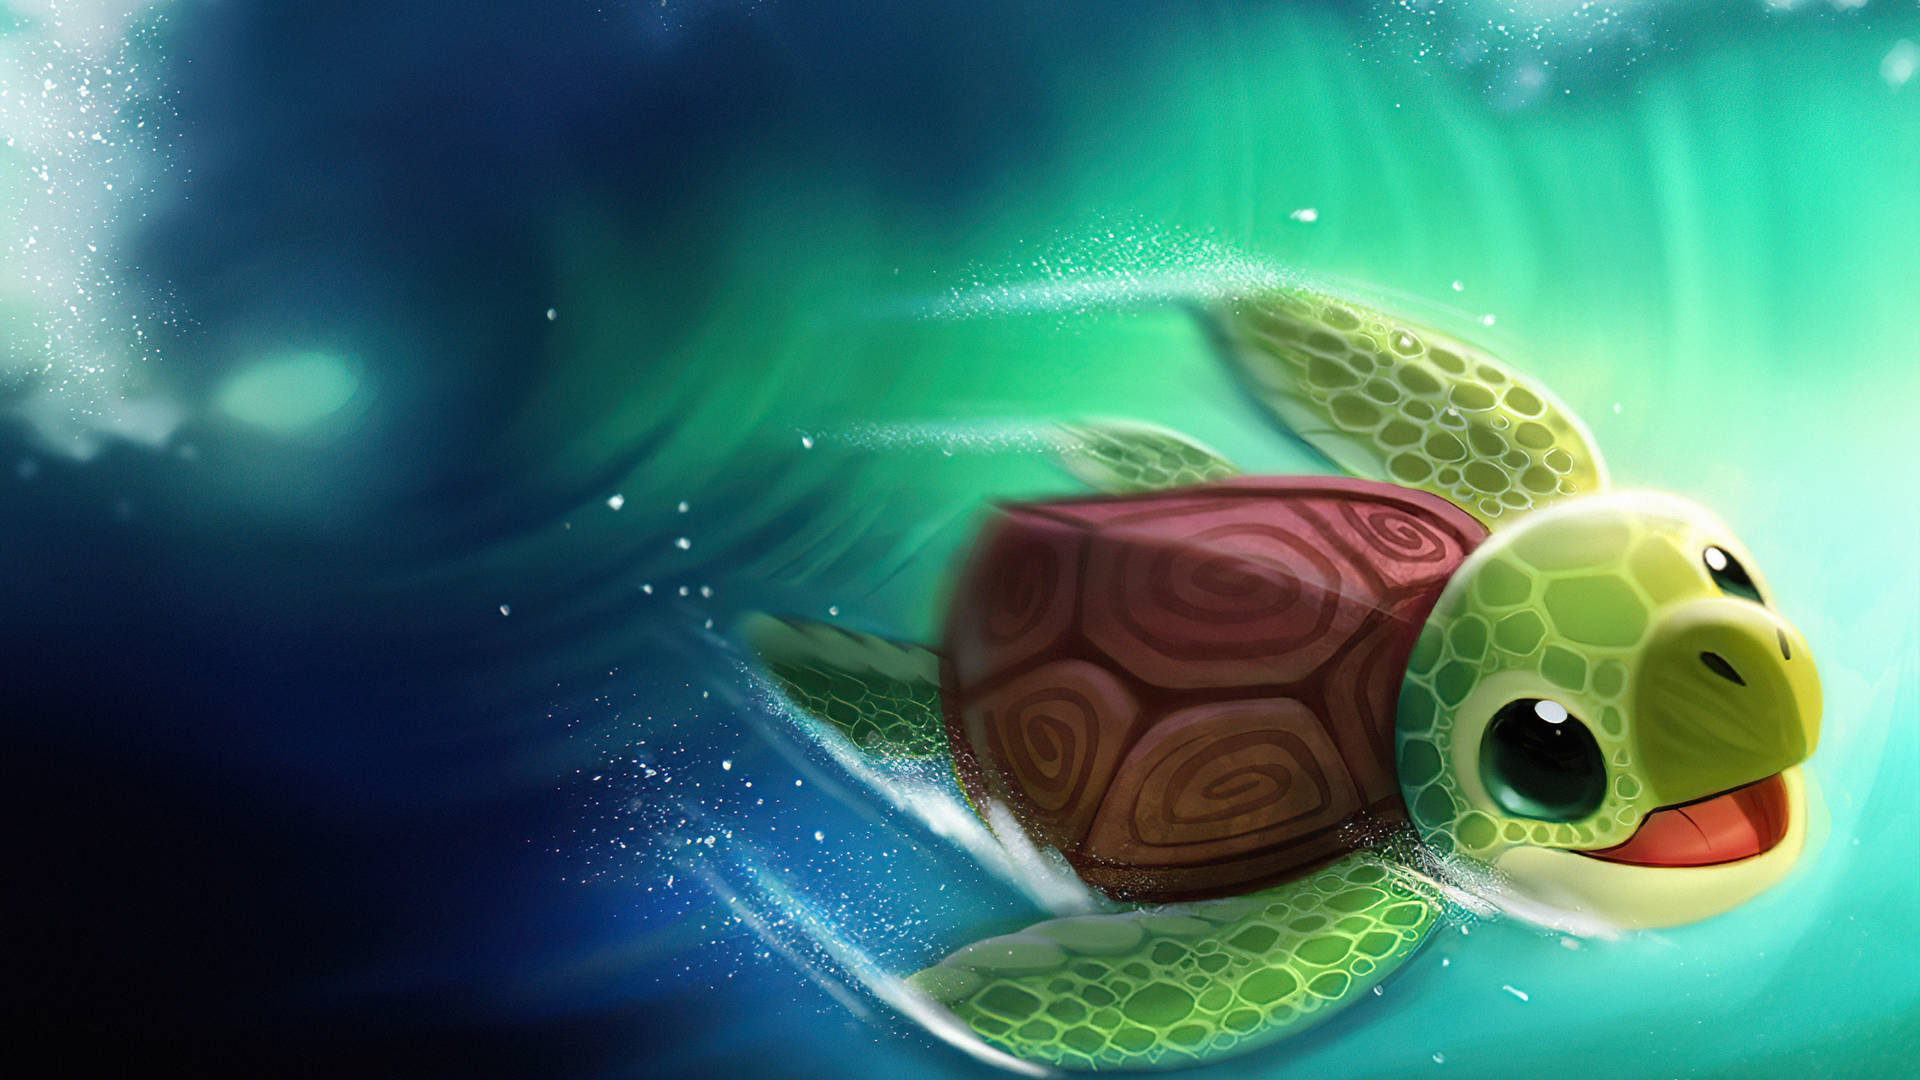 Turtle Digital Art Wallpaper